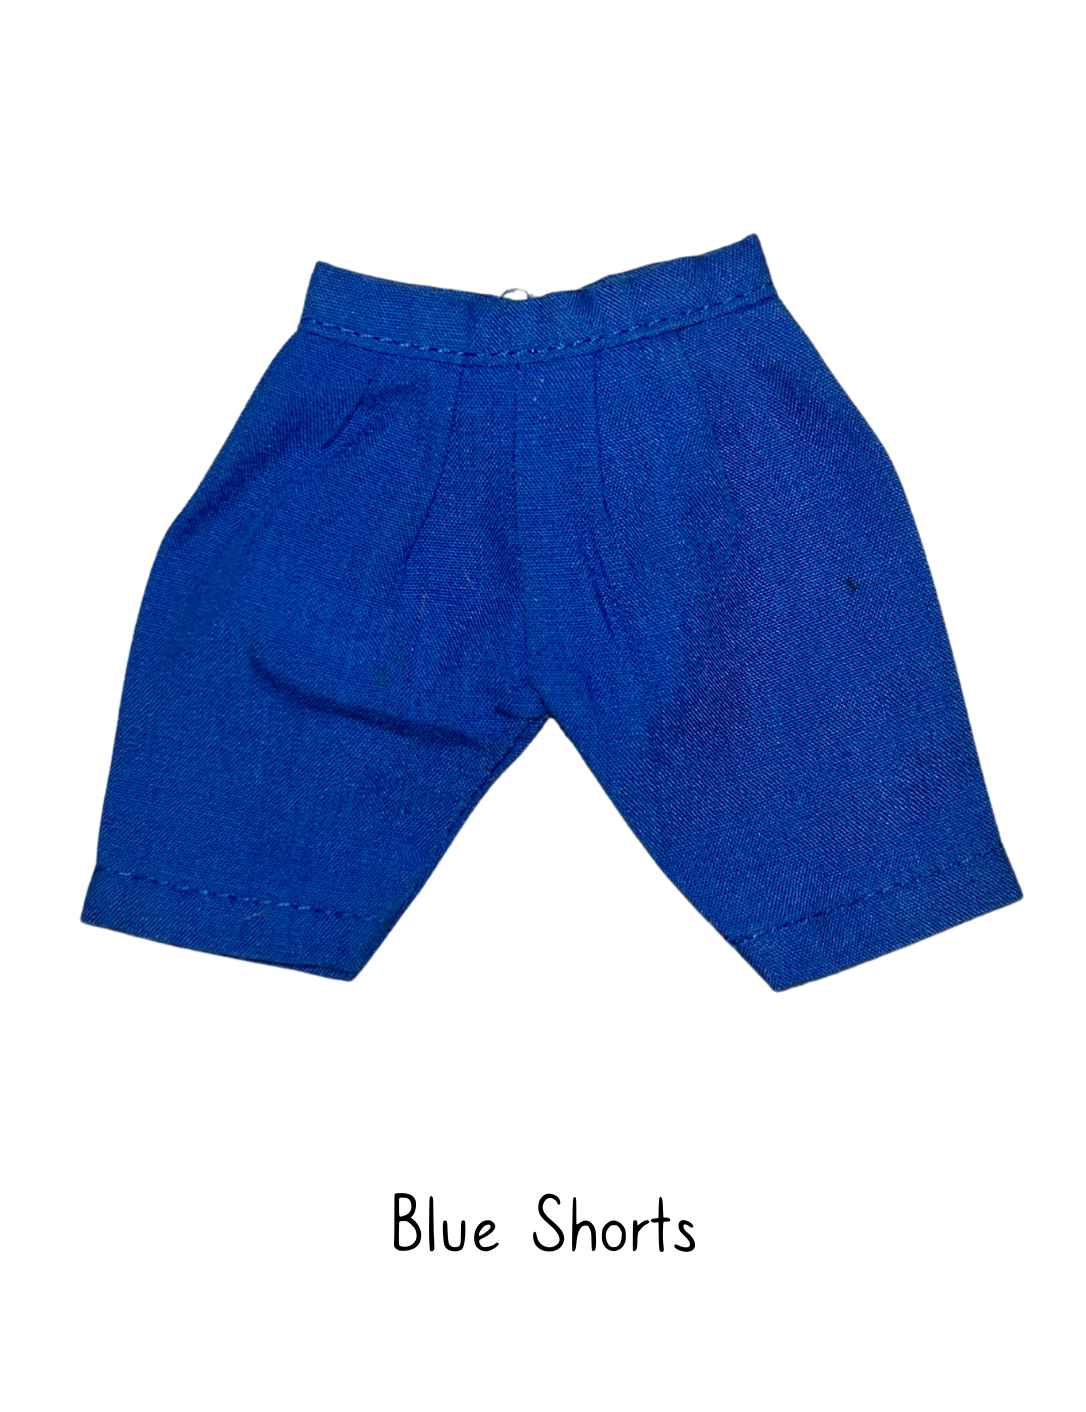 1984 - 1985 Pedigree Sindy Doll Casuals Fashion Blue Shorts